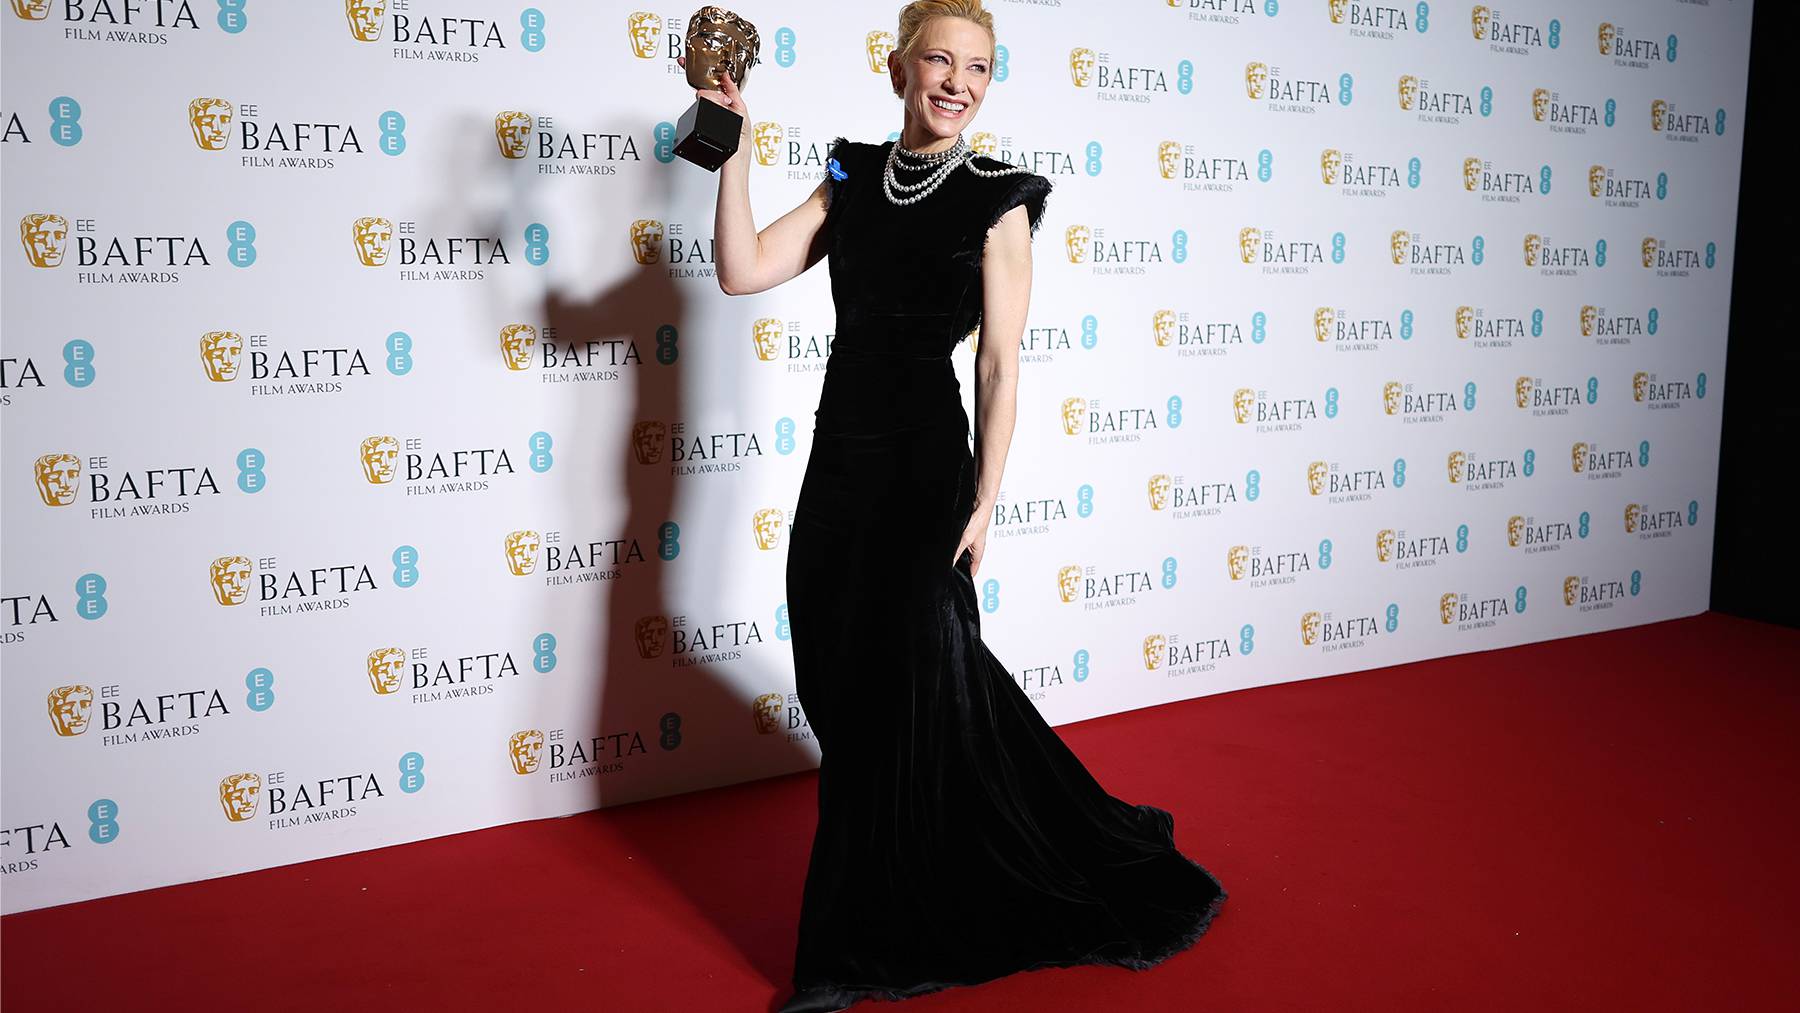 Cate Blanchett on the red carpet